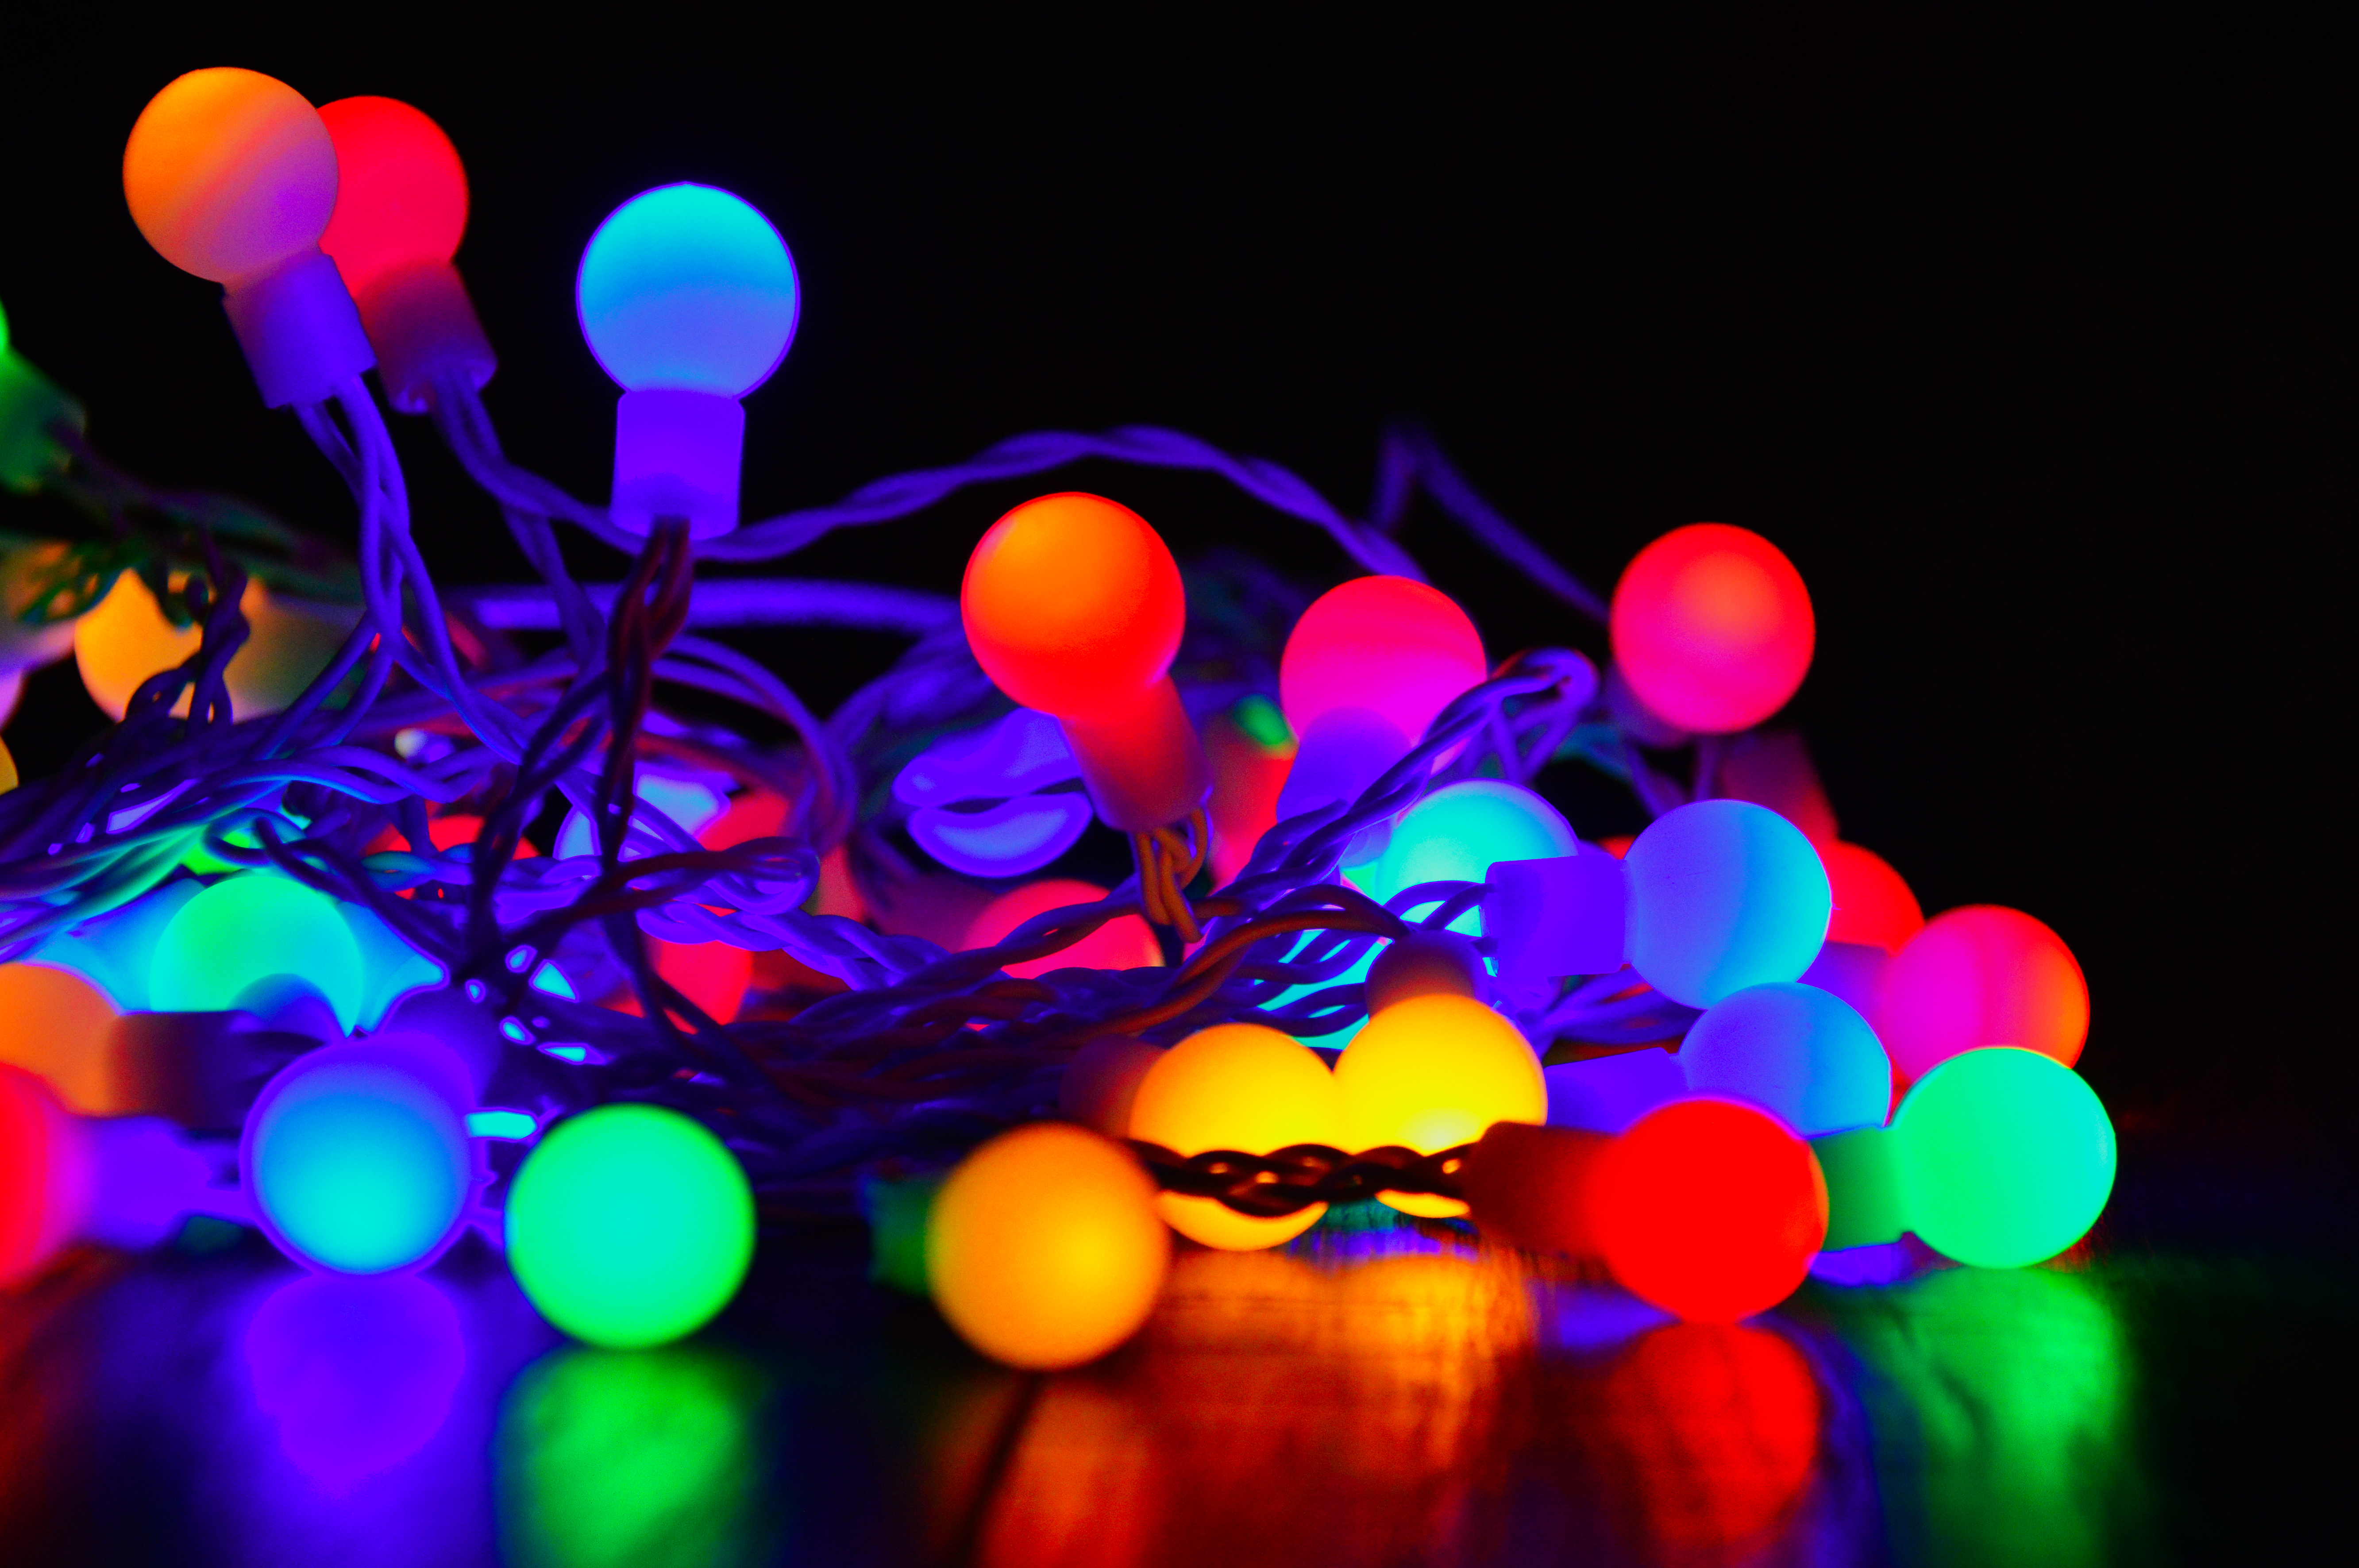 light-lights-background-bulb-colorful-string-1448783-pxhere.com